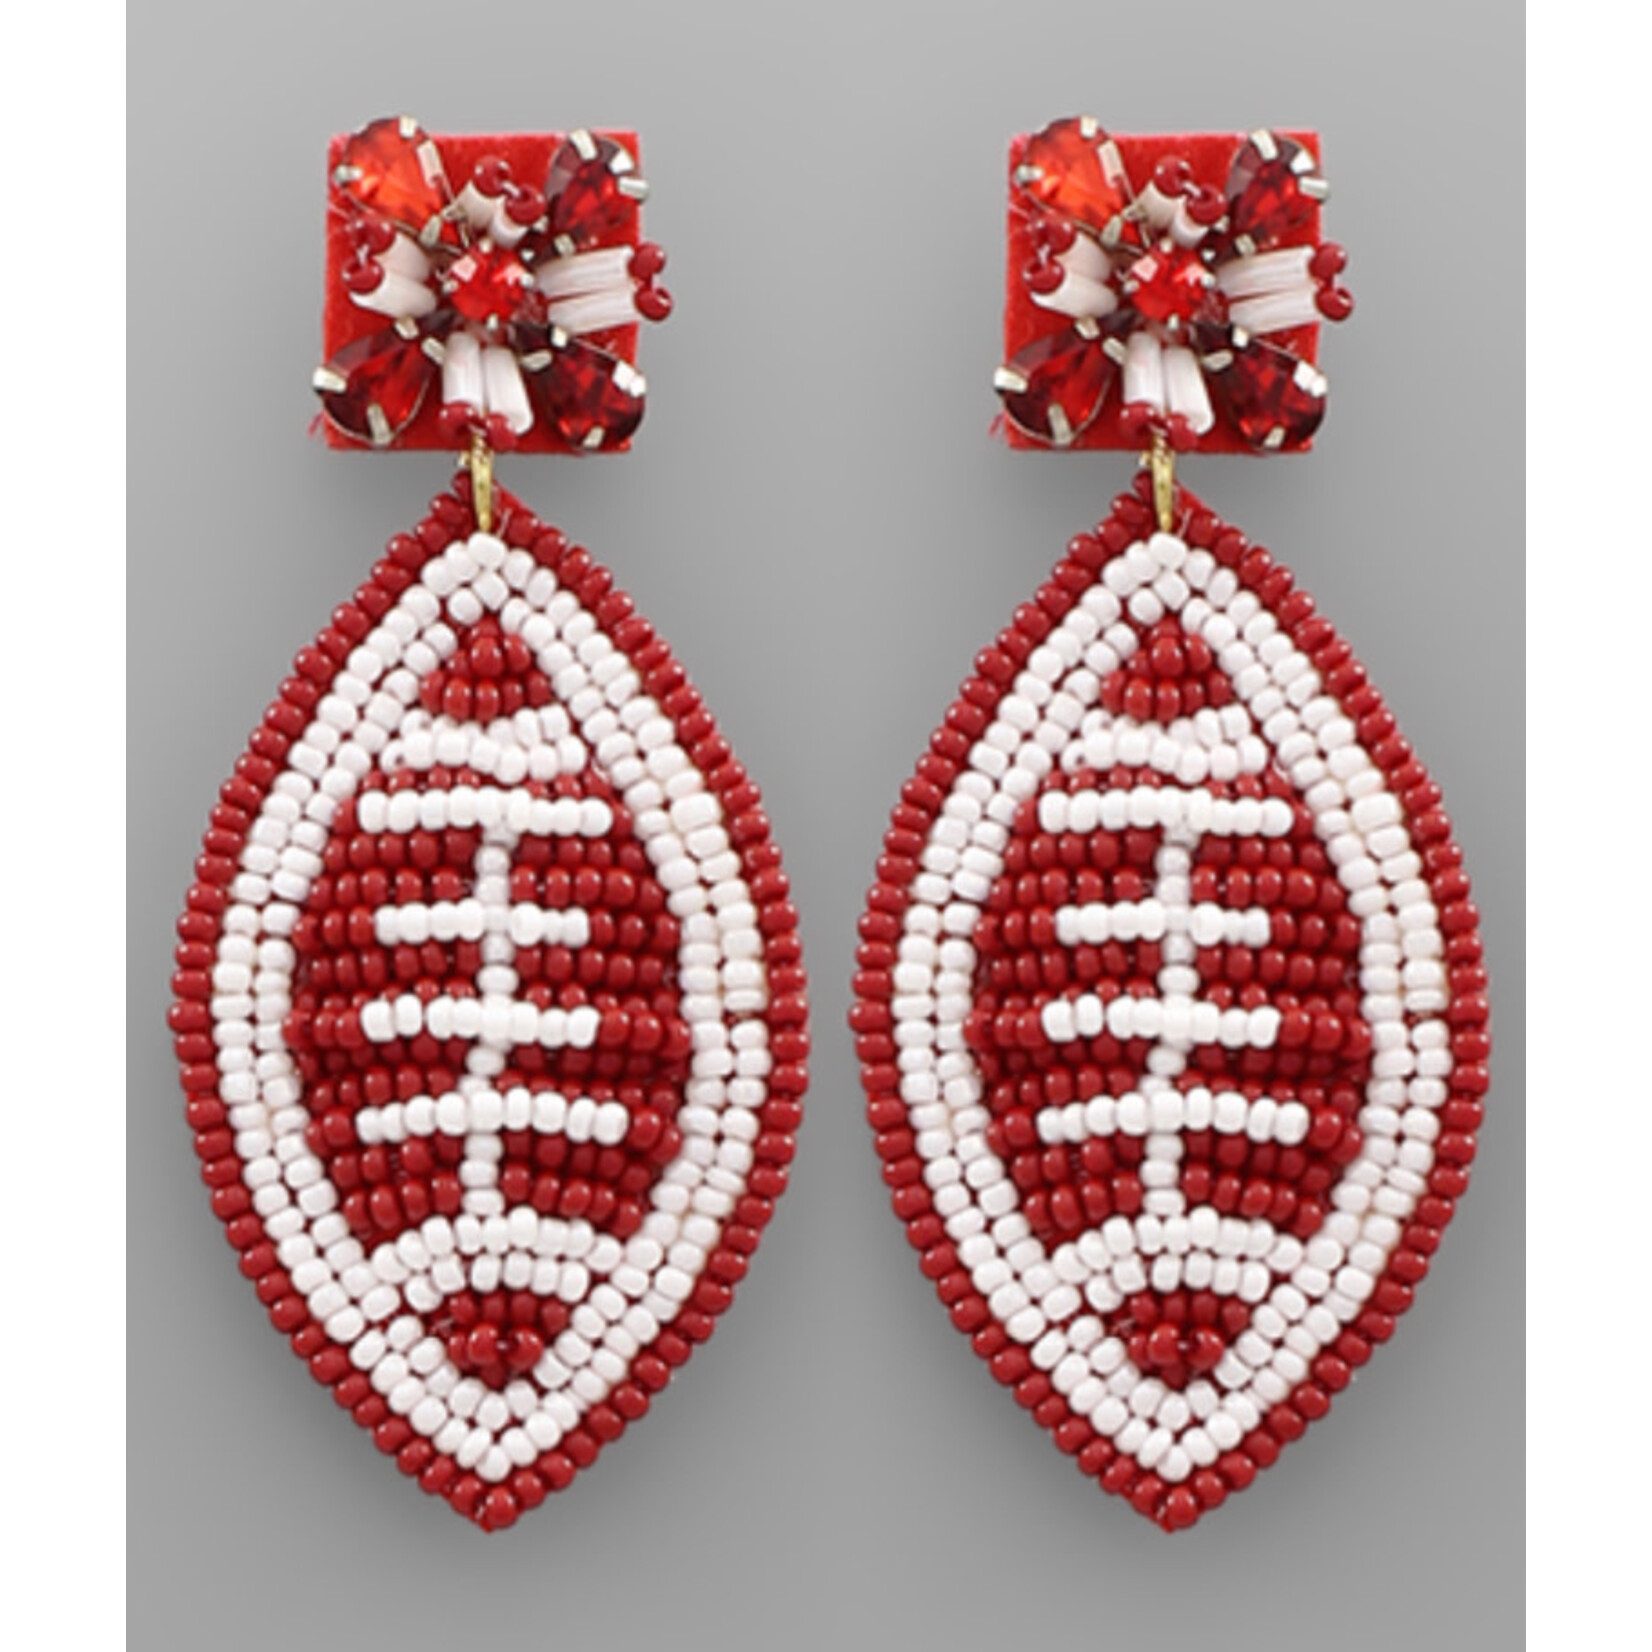 Beaded Football Earrings-Maroon/White